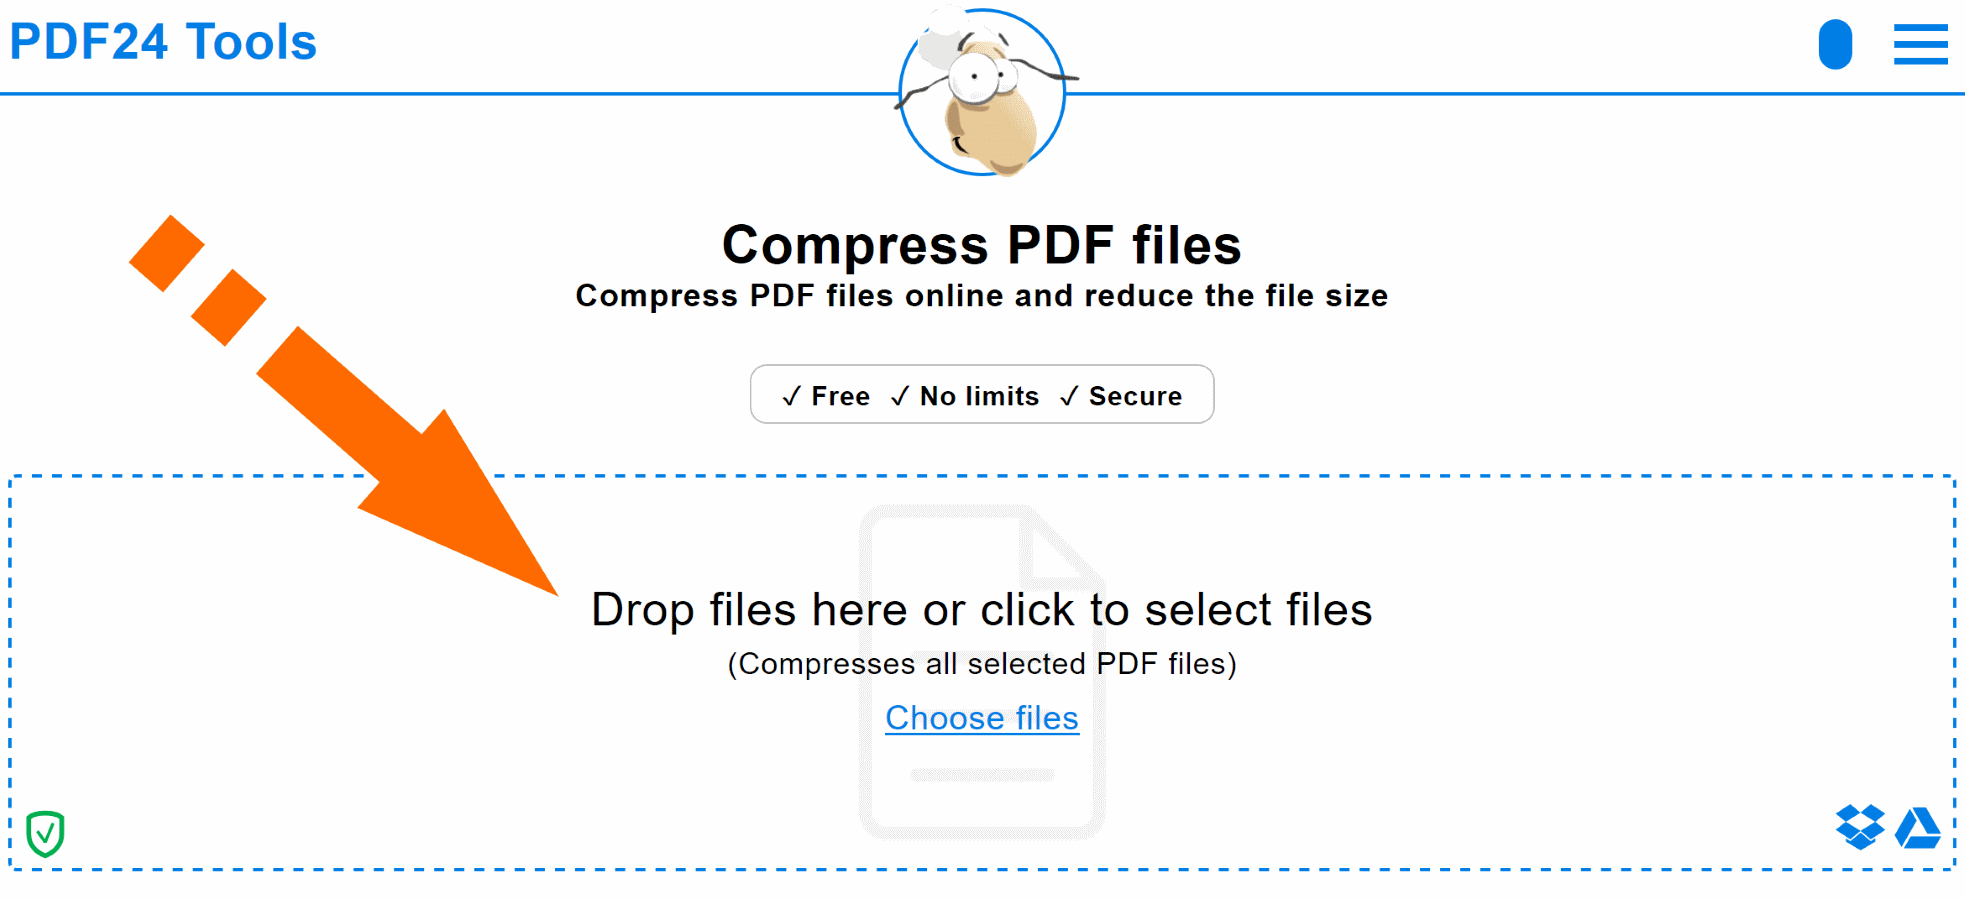 Compress Pdf - Quickly, Online, Free - Pdf24 Tools